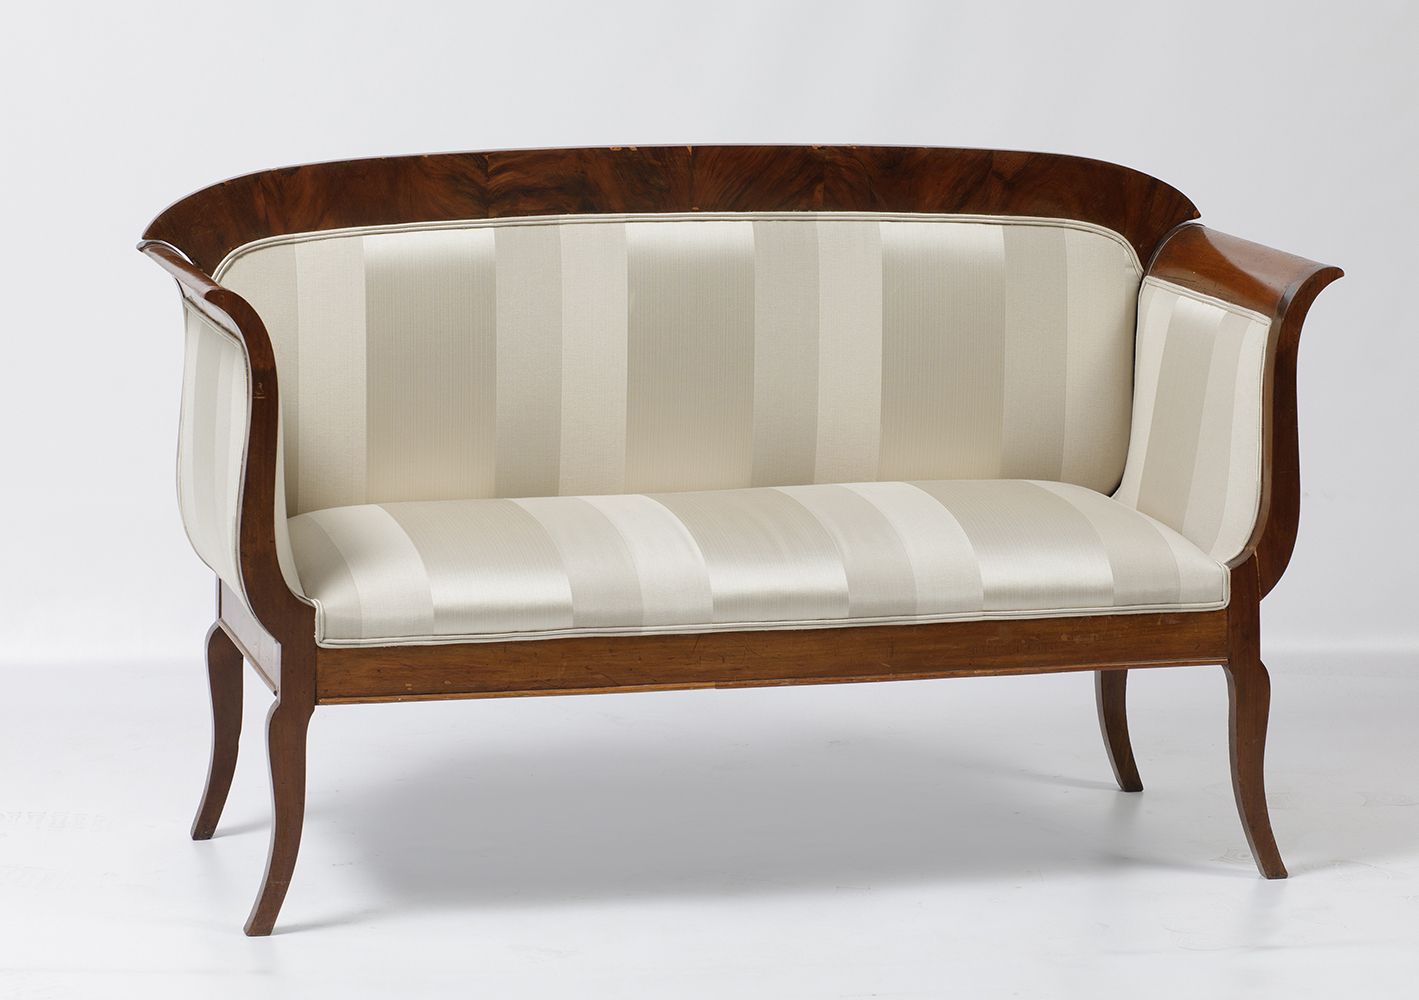 Sofa in mahogany palm English sofa S.XIX in mahogany wood . 92 x 15 x 54 cm.